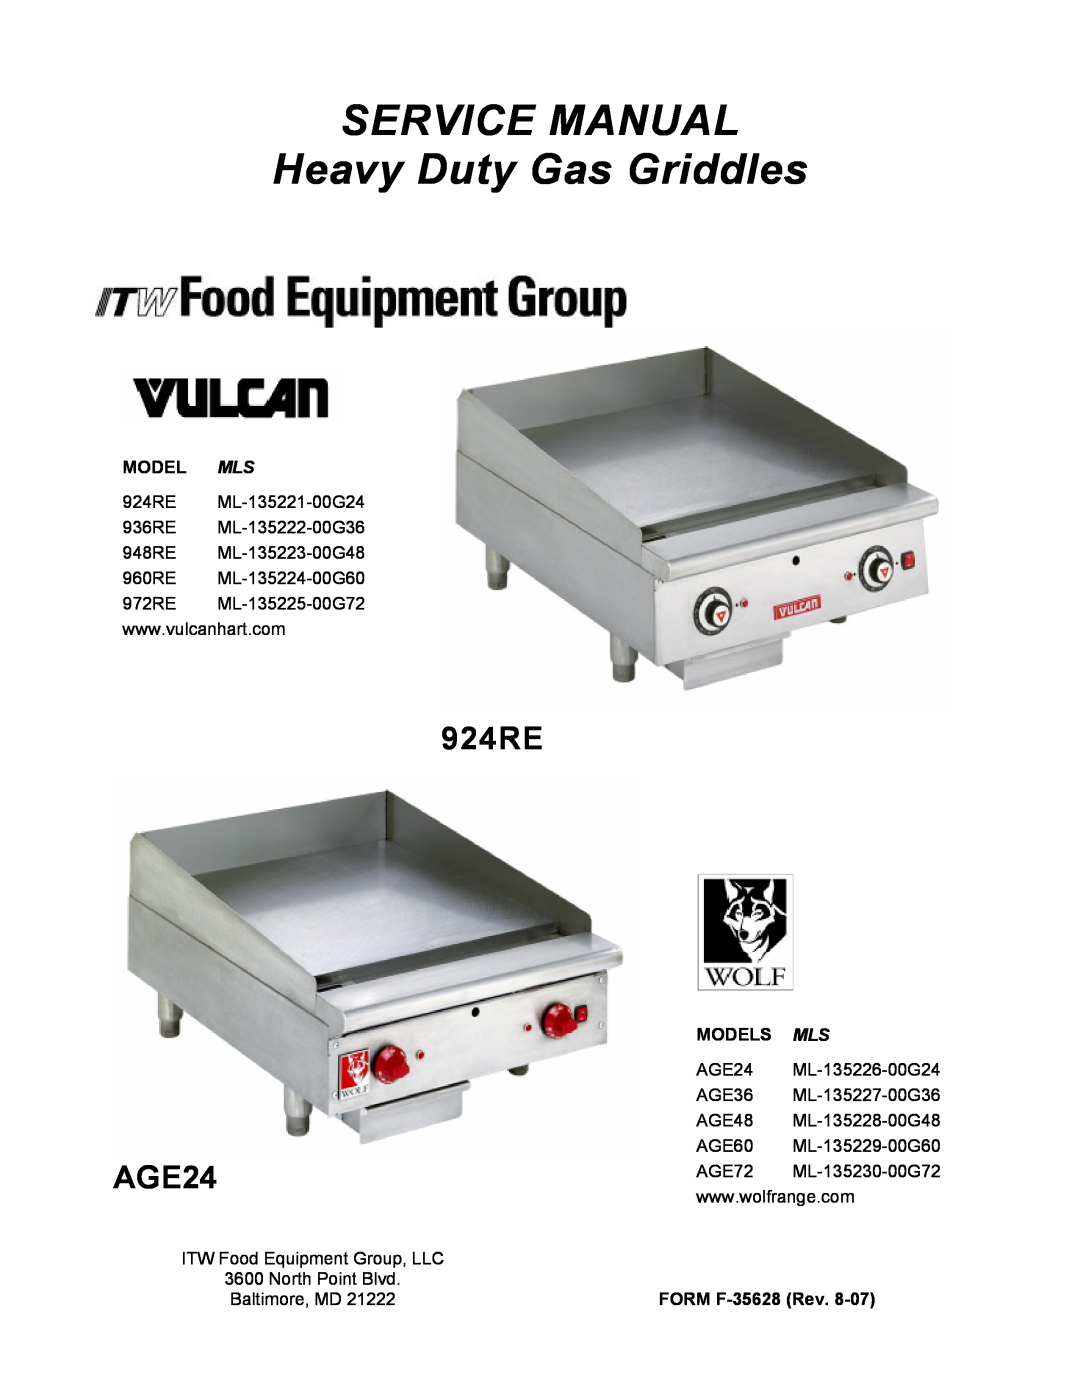 Vulcan-Hart ML-136221-00G24 manual 924RE AGE24, Model Mls, 960RE ML-135224-00G60, Models Mls, AGE60 ML-135229-00G60 